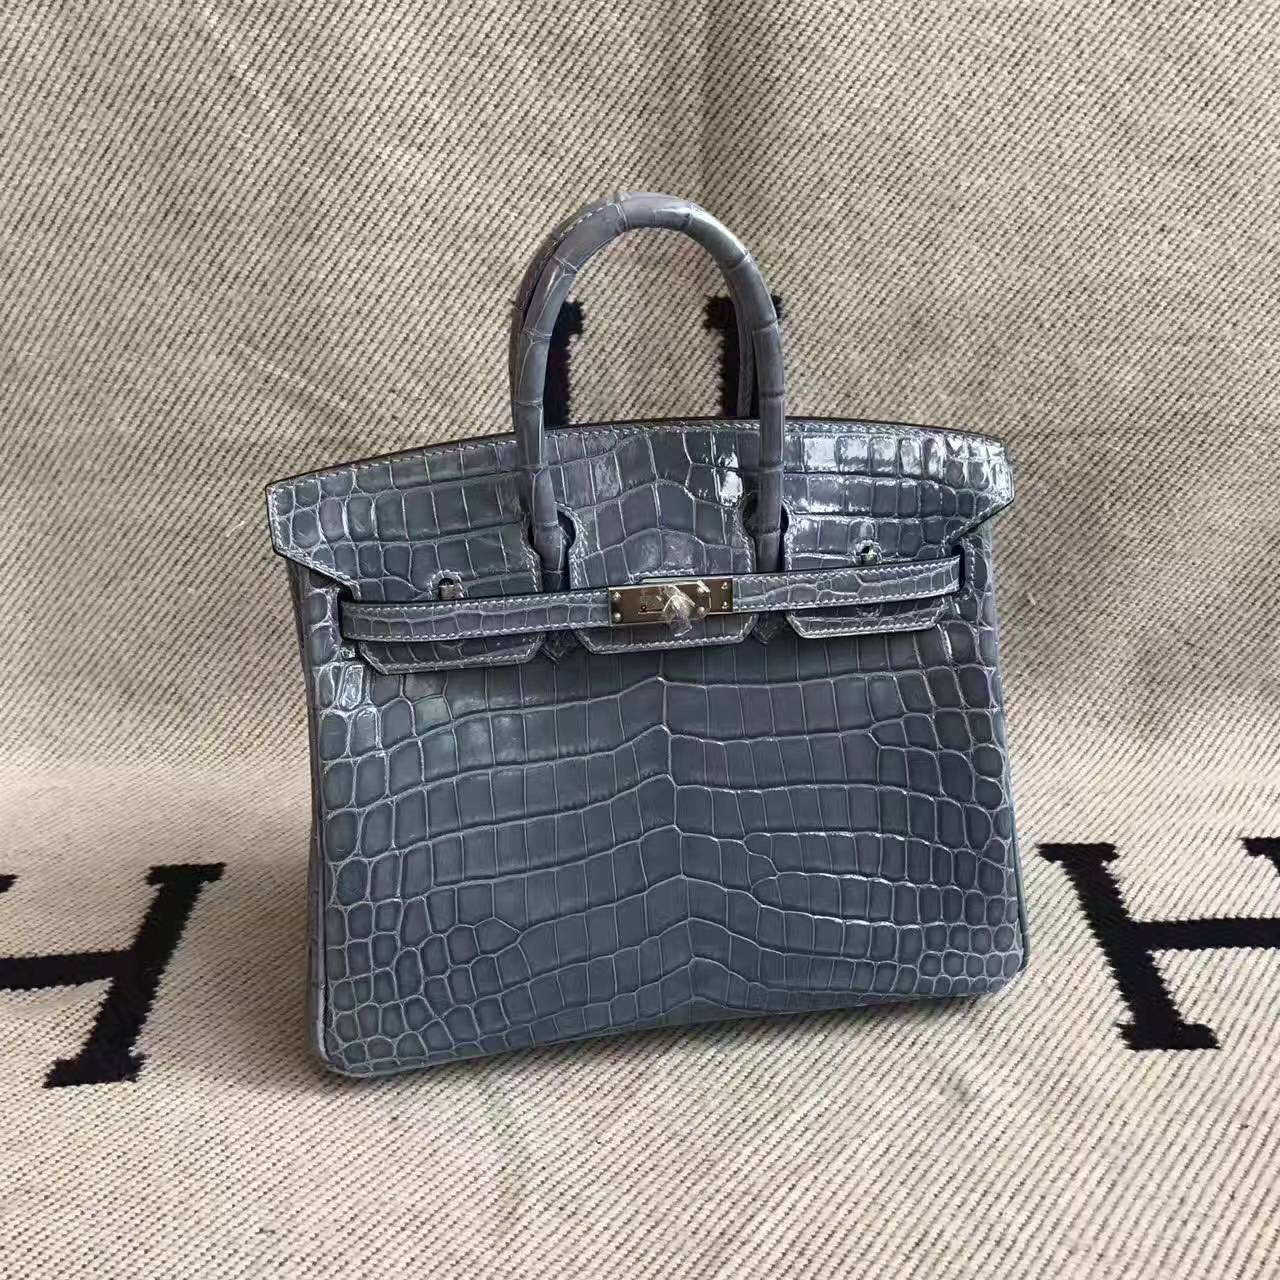 Discount Hermes CK75 Blue Jean Crocodile Shiny Leather Birkin Bag 25cm